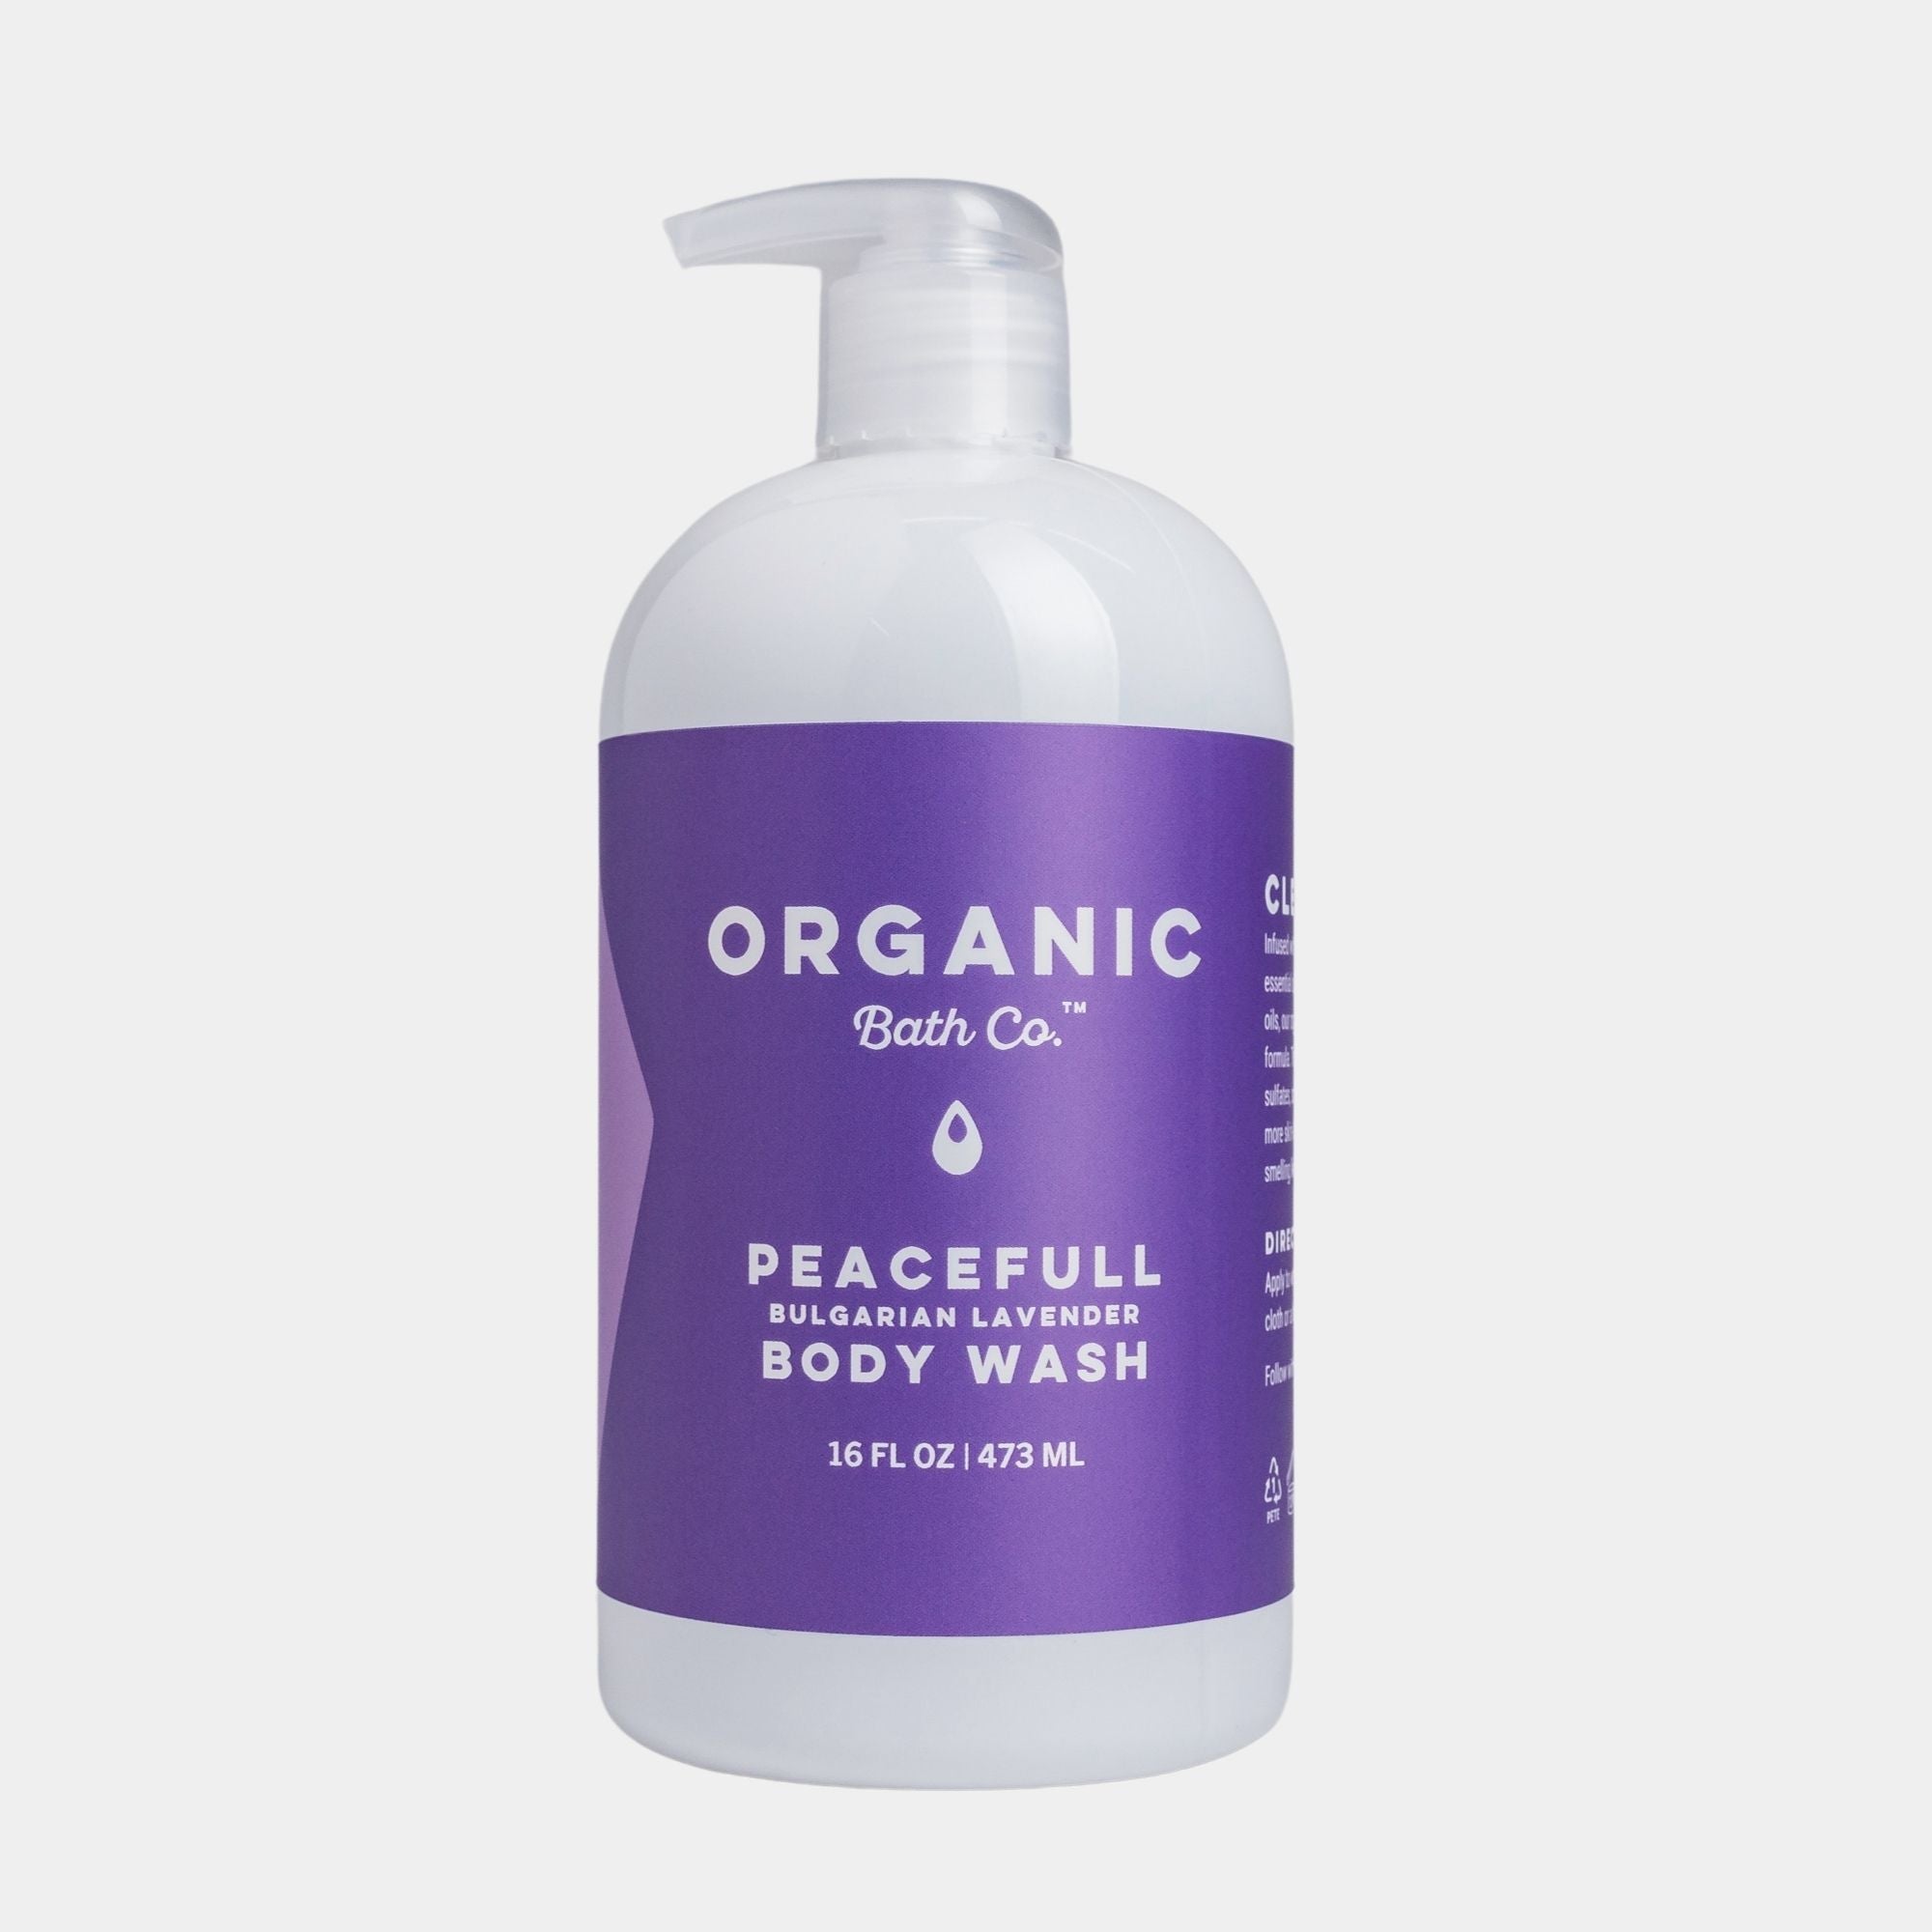 PeaceFull Organic Body Wash - Organic Bath Co.